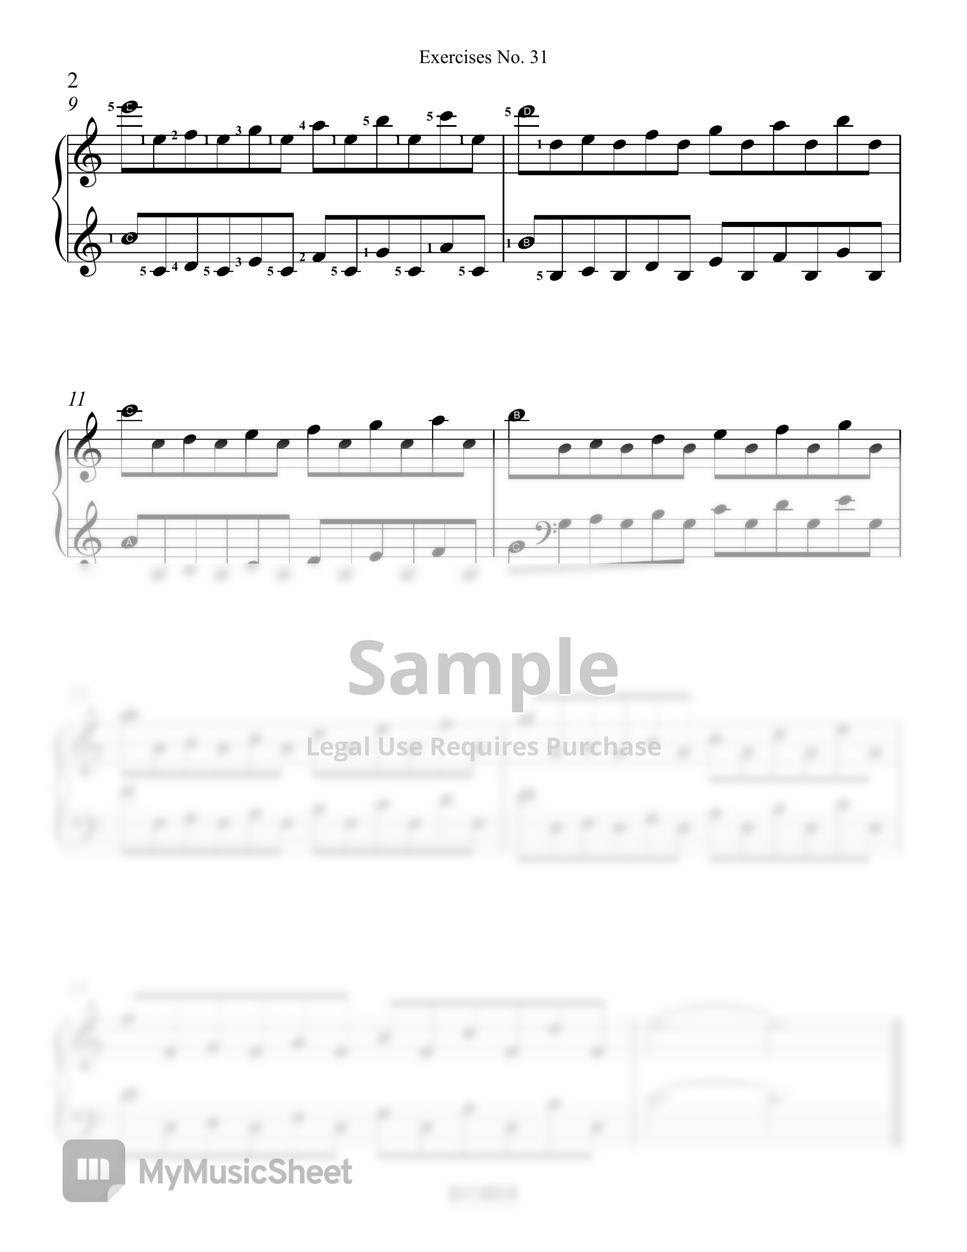 Hanon - [Piano Basics] Finger Practice - Hanon No. 31 (Easy) by PianoSSam